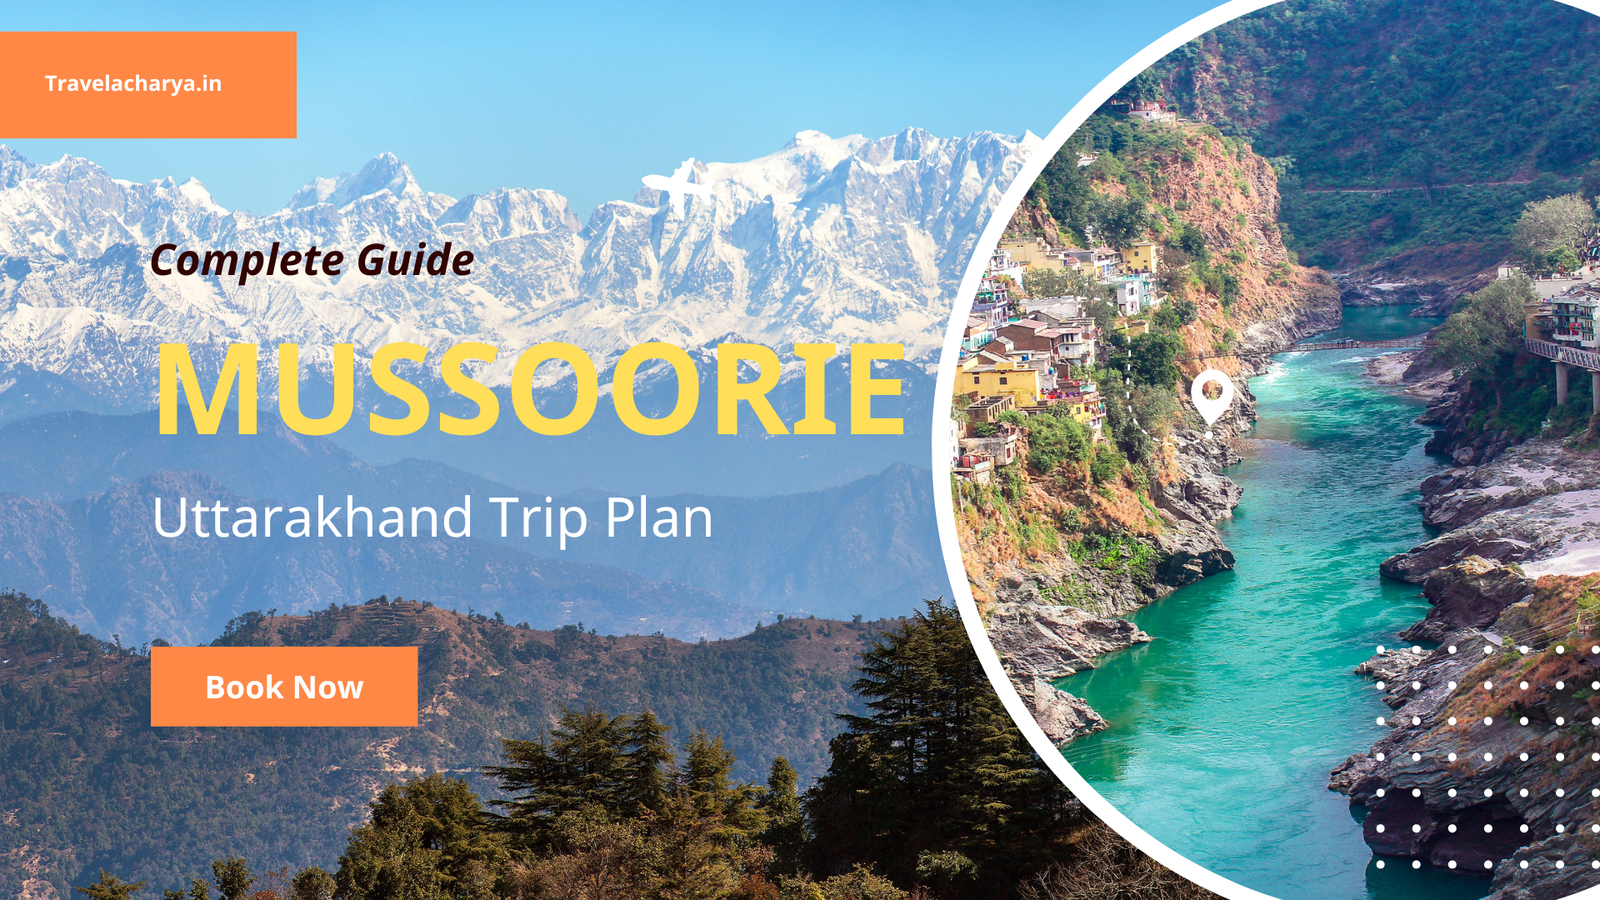 Mussoorie, Uttarakhand Trip Plan: Complete Guide